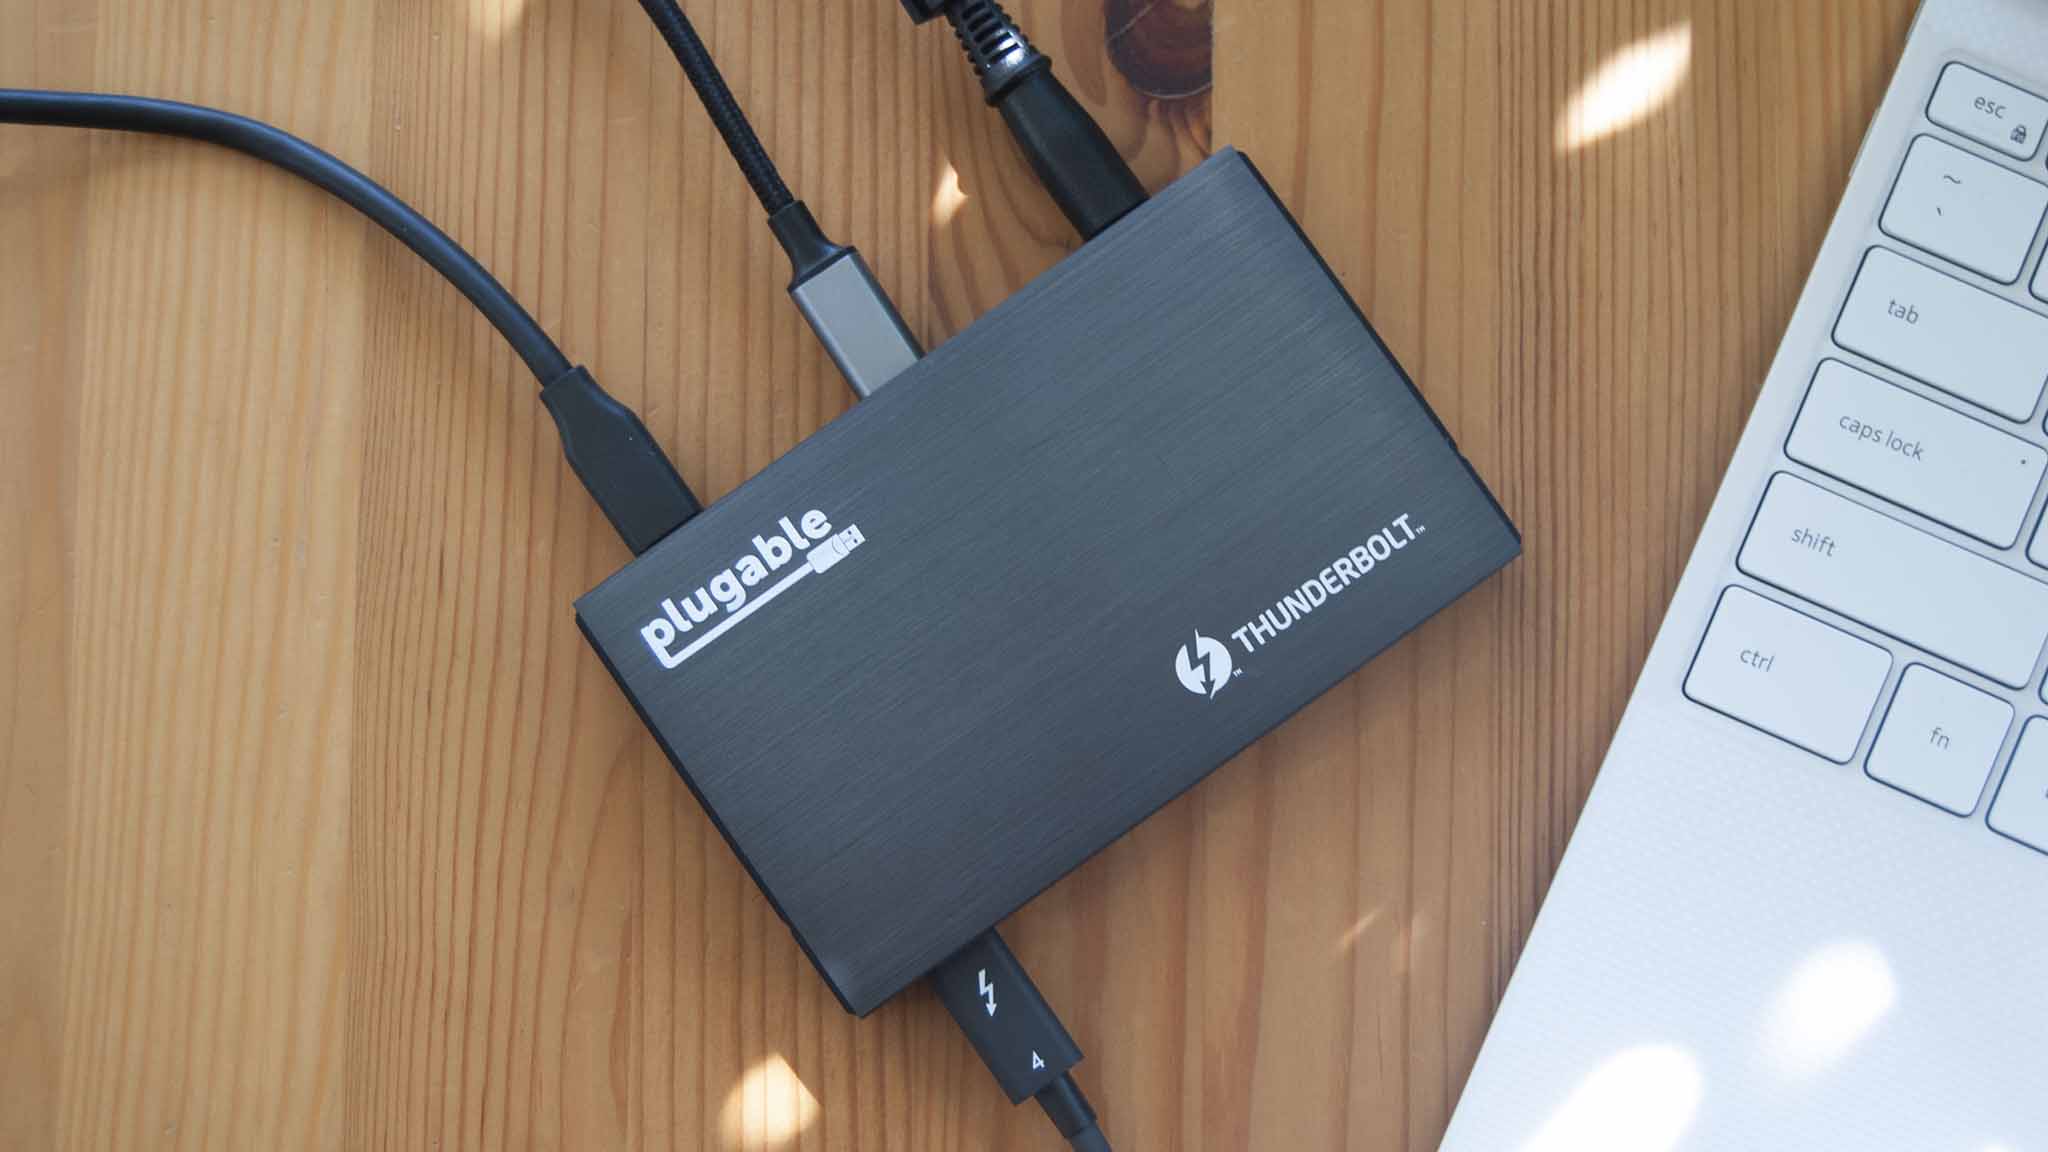 Conectável Thunderbolt 4 e Hub USB4